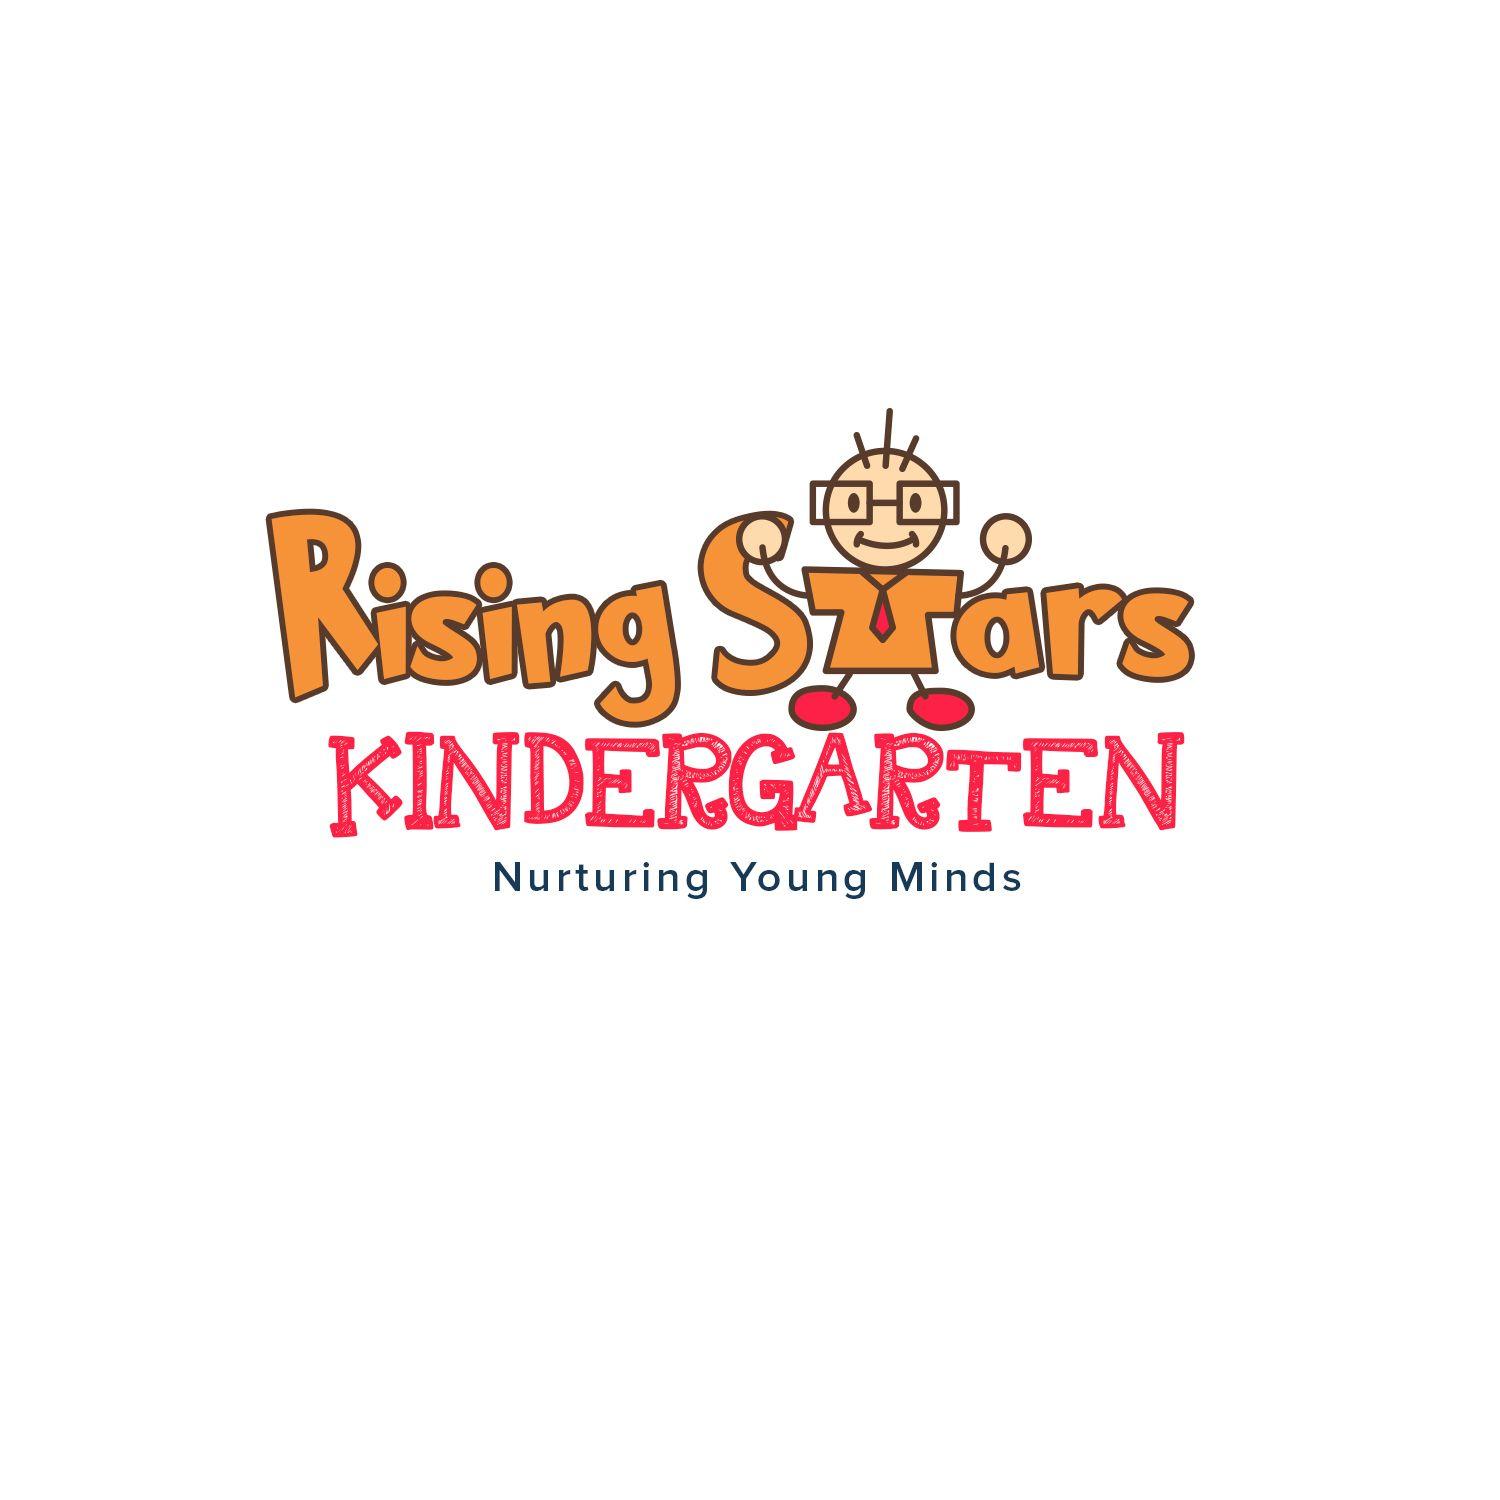 Kindergarten Logo - Rising Stars Kindergarten PSD Logo Design | Cretizndesign